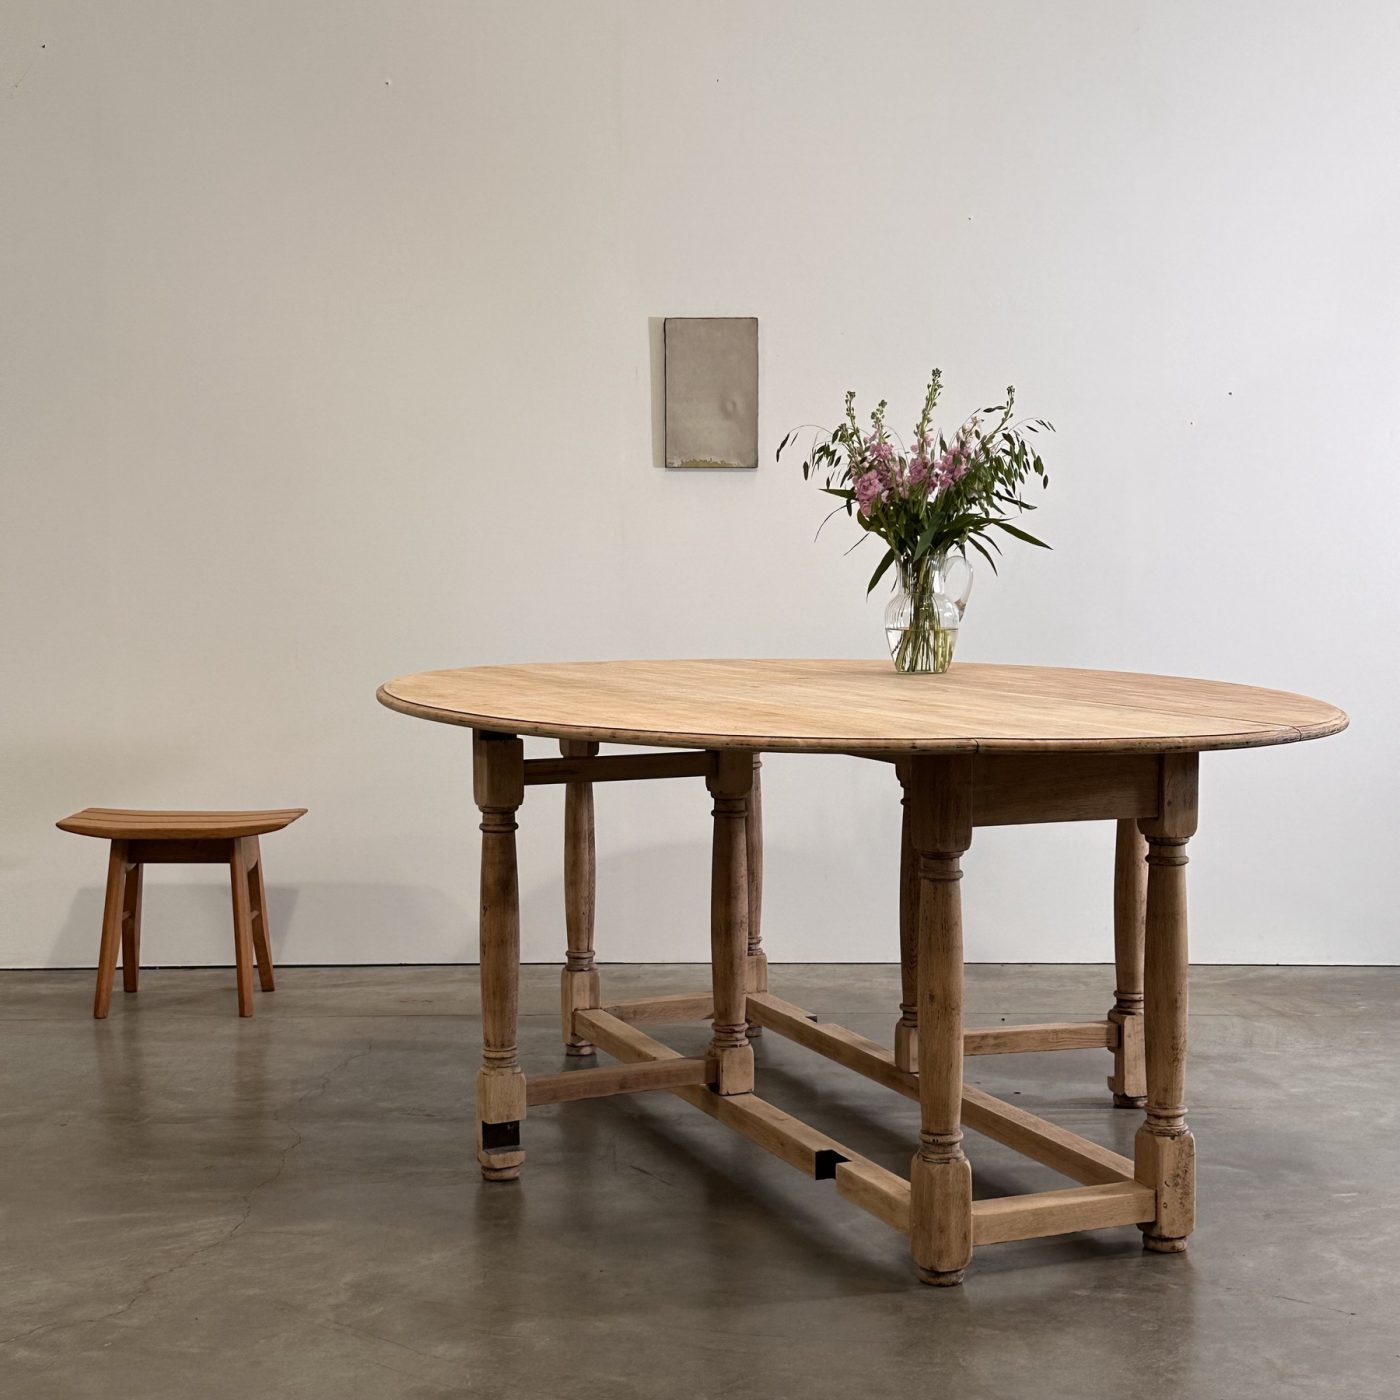 objet-vagabond-gateleg-table0007